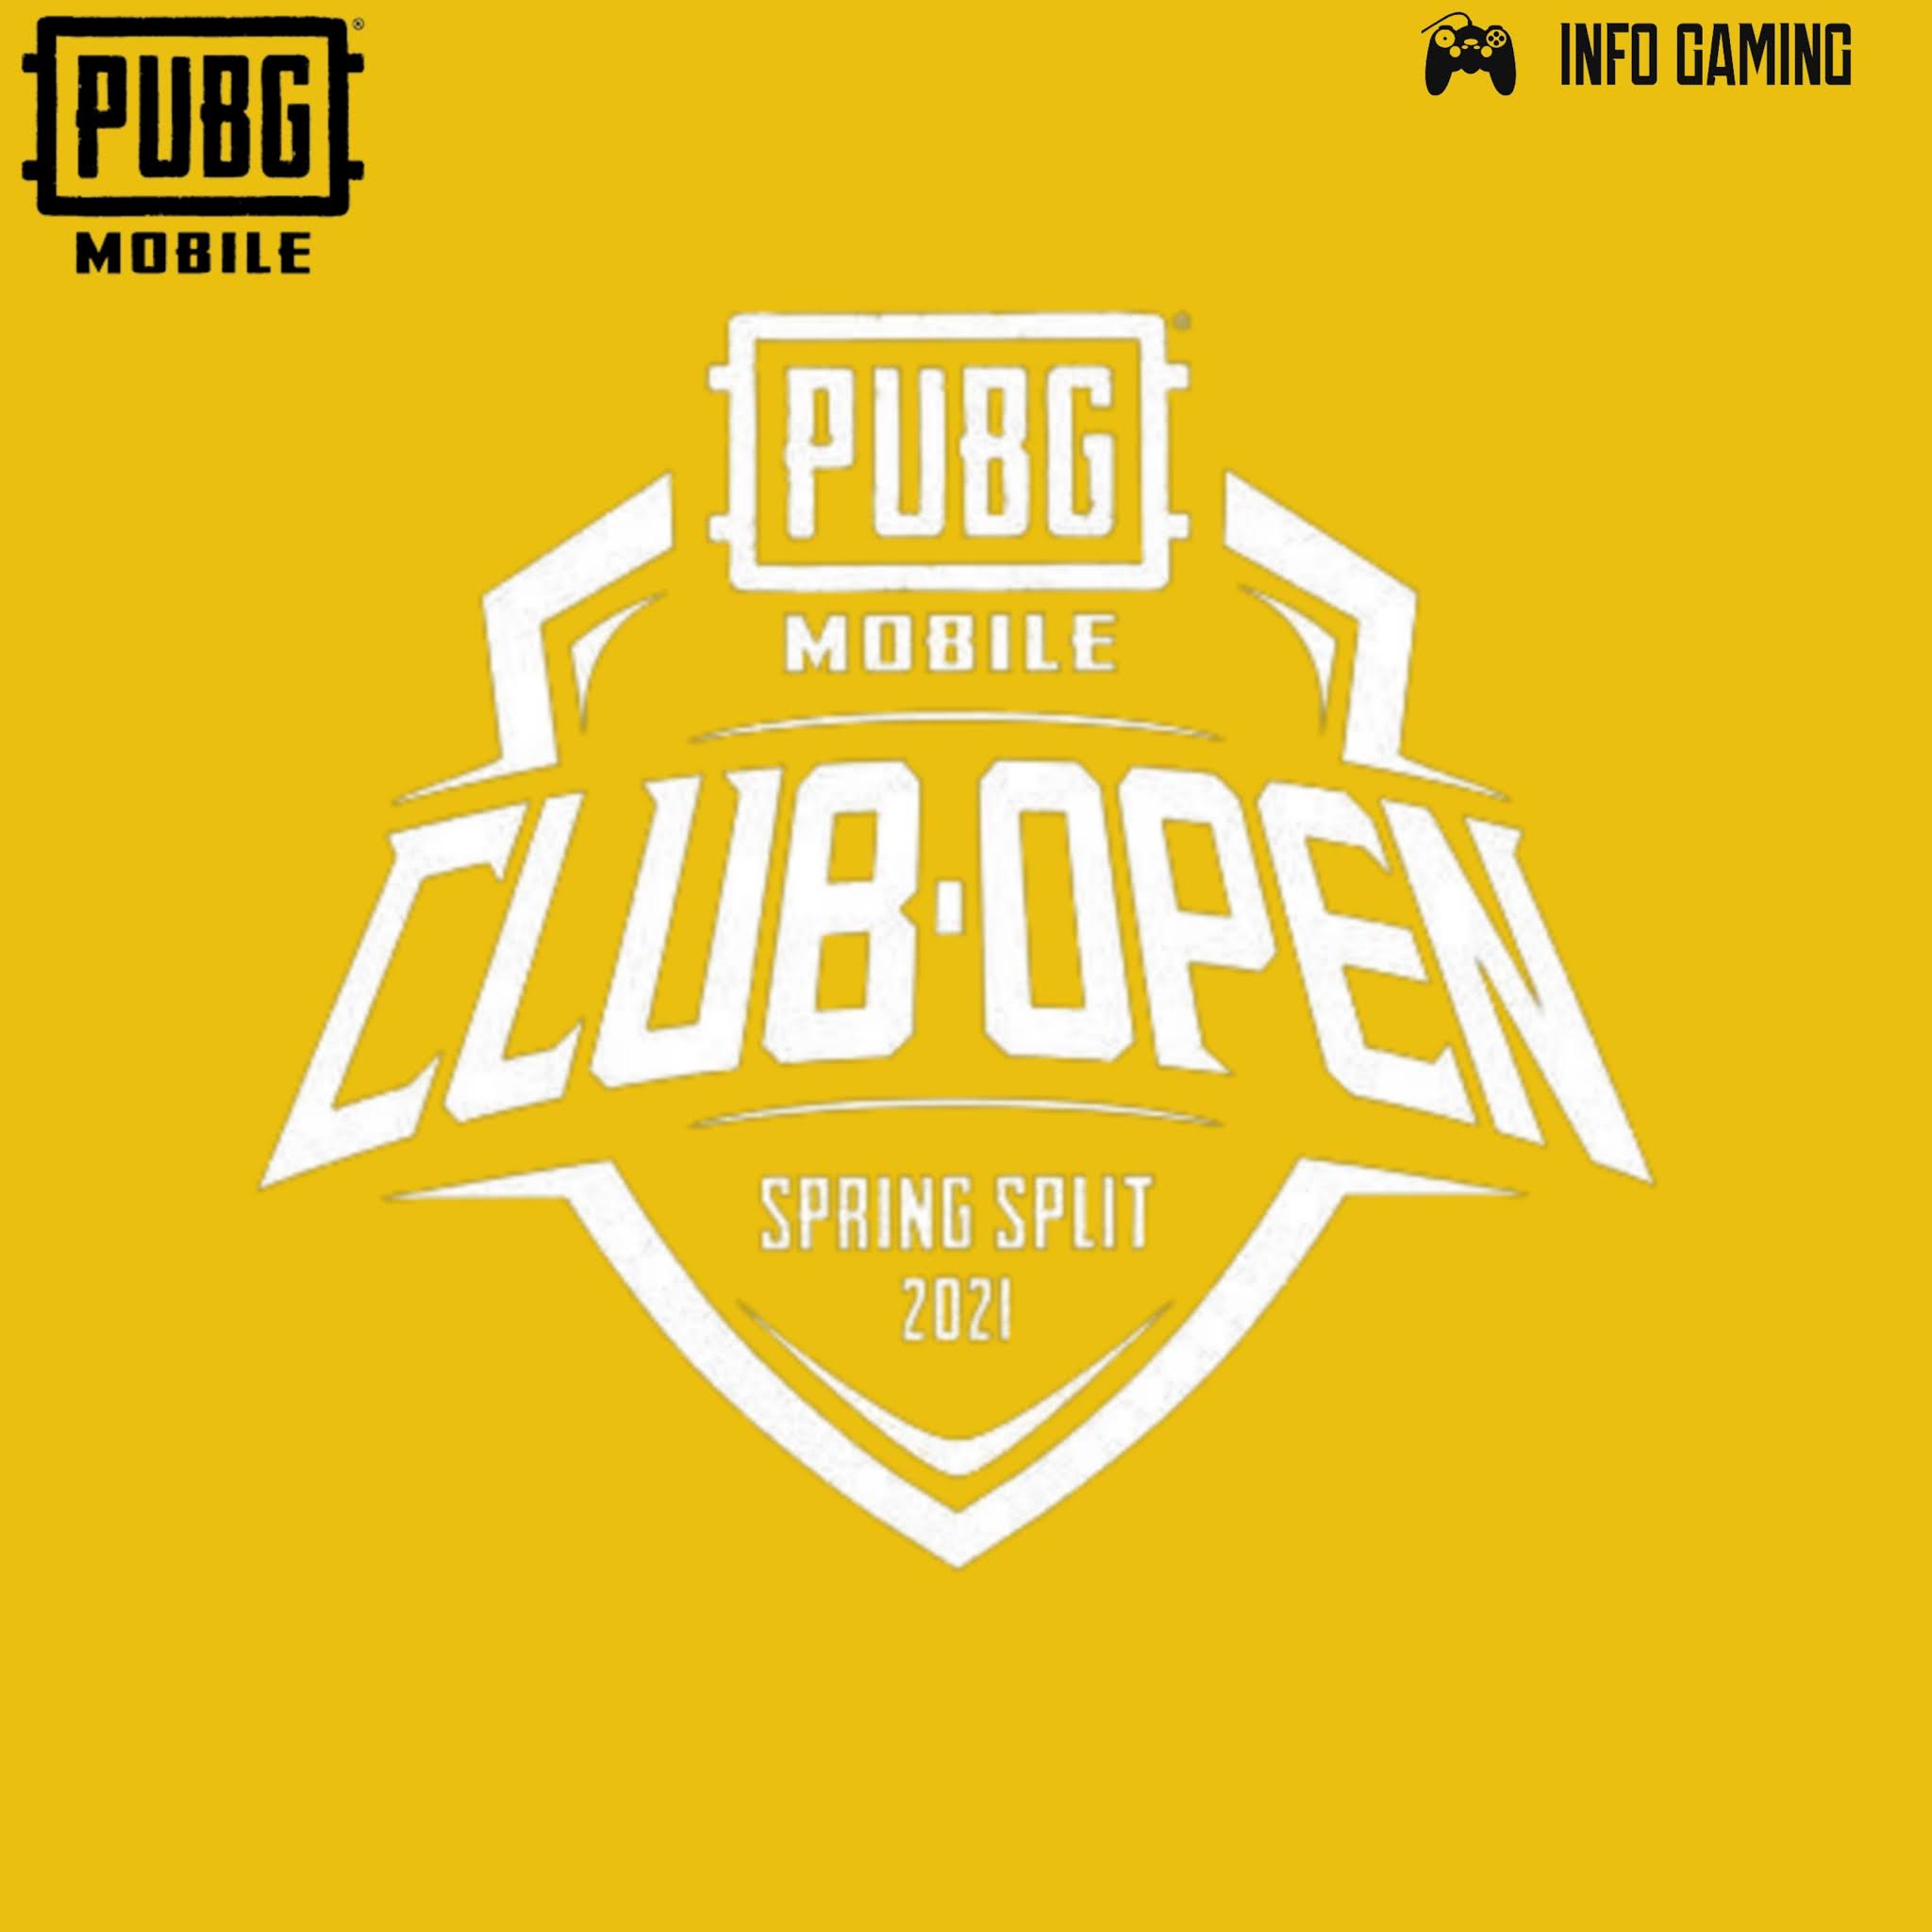 PUBG Mobile Club Open 2021 Spring Split Online qualifiers: All Details